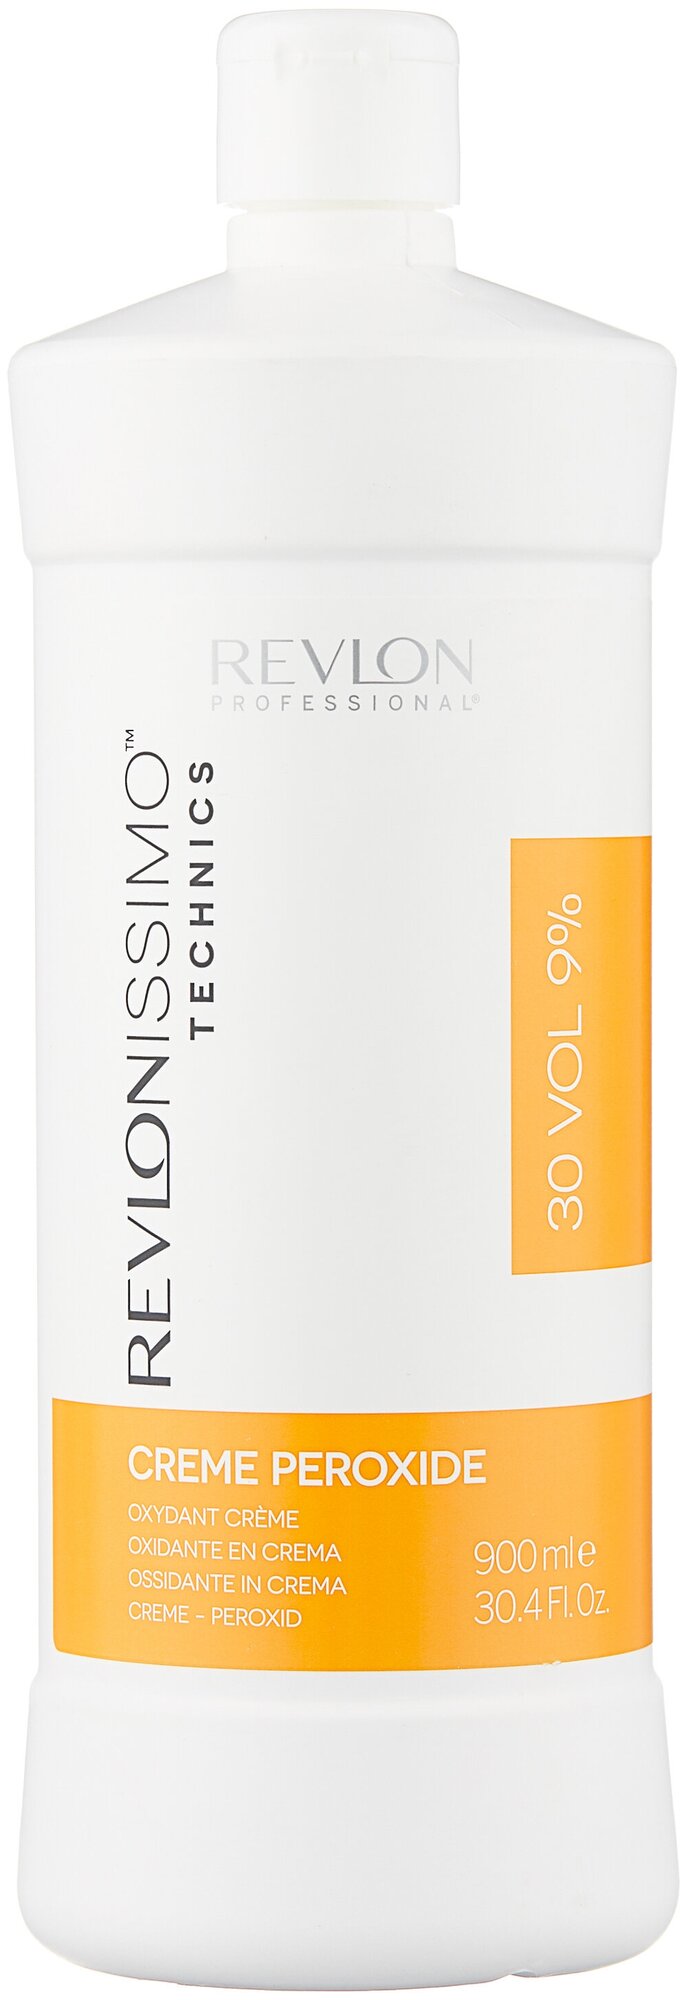  Revlon Professional Creme Peroxide 30 VOL 9% 900 